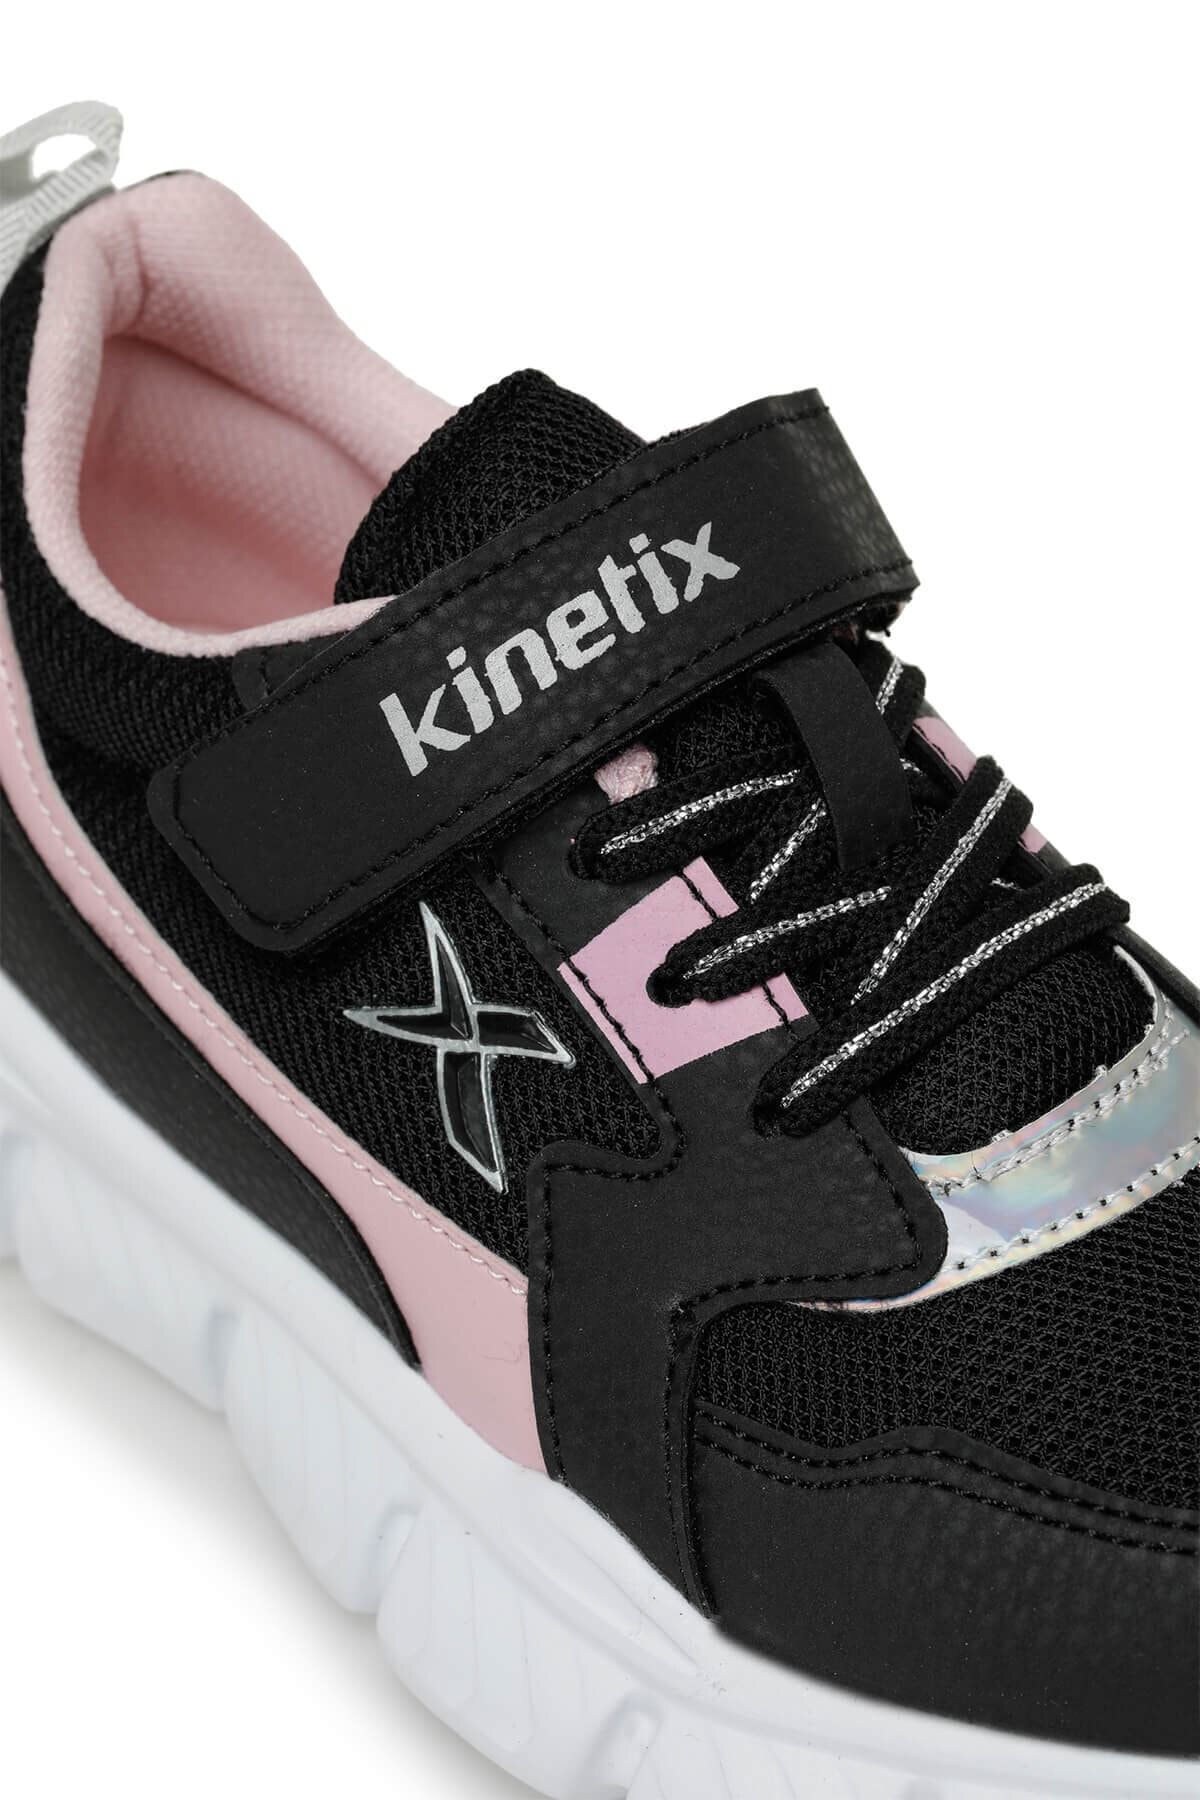 Kinetix Helıum J 3fx Black Girls' Sports Shoes - Trendyol